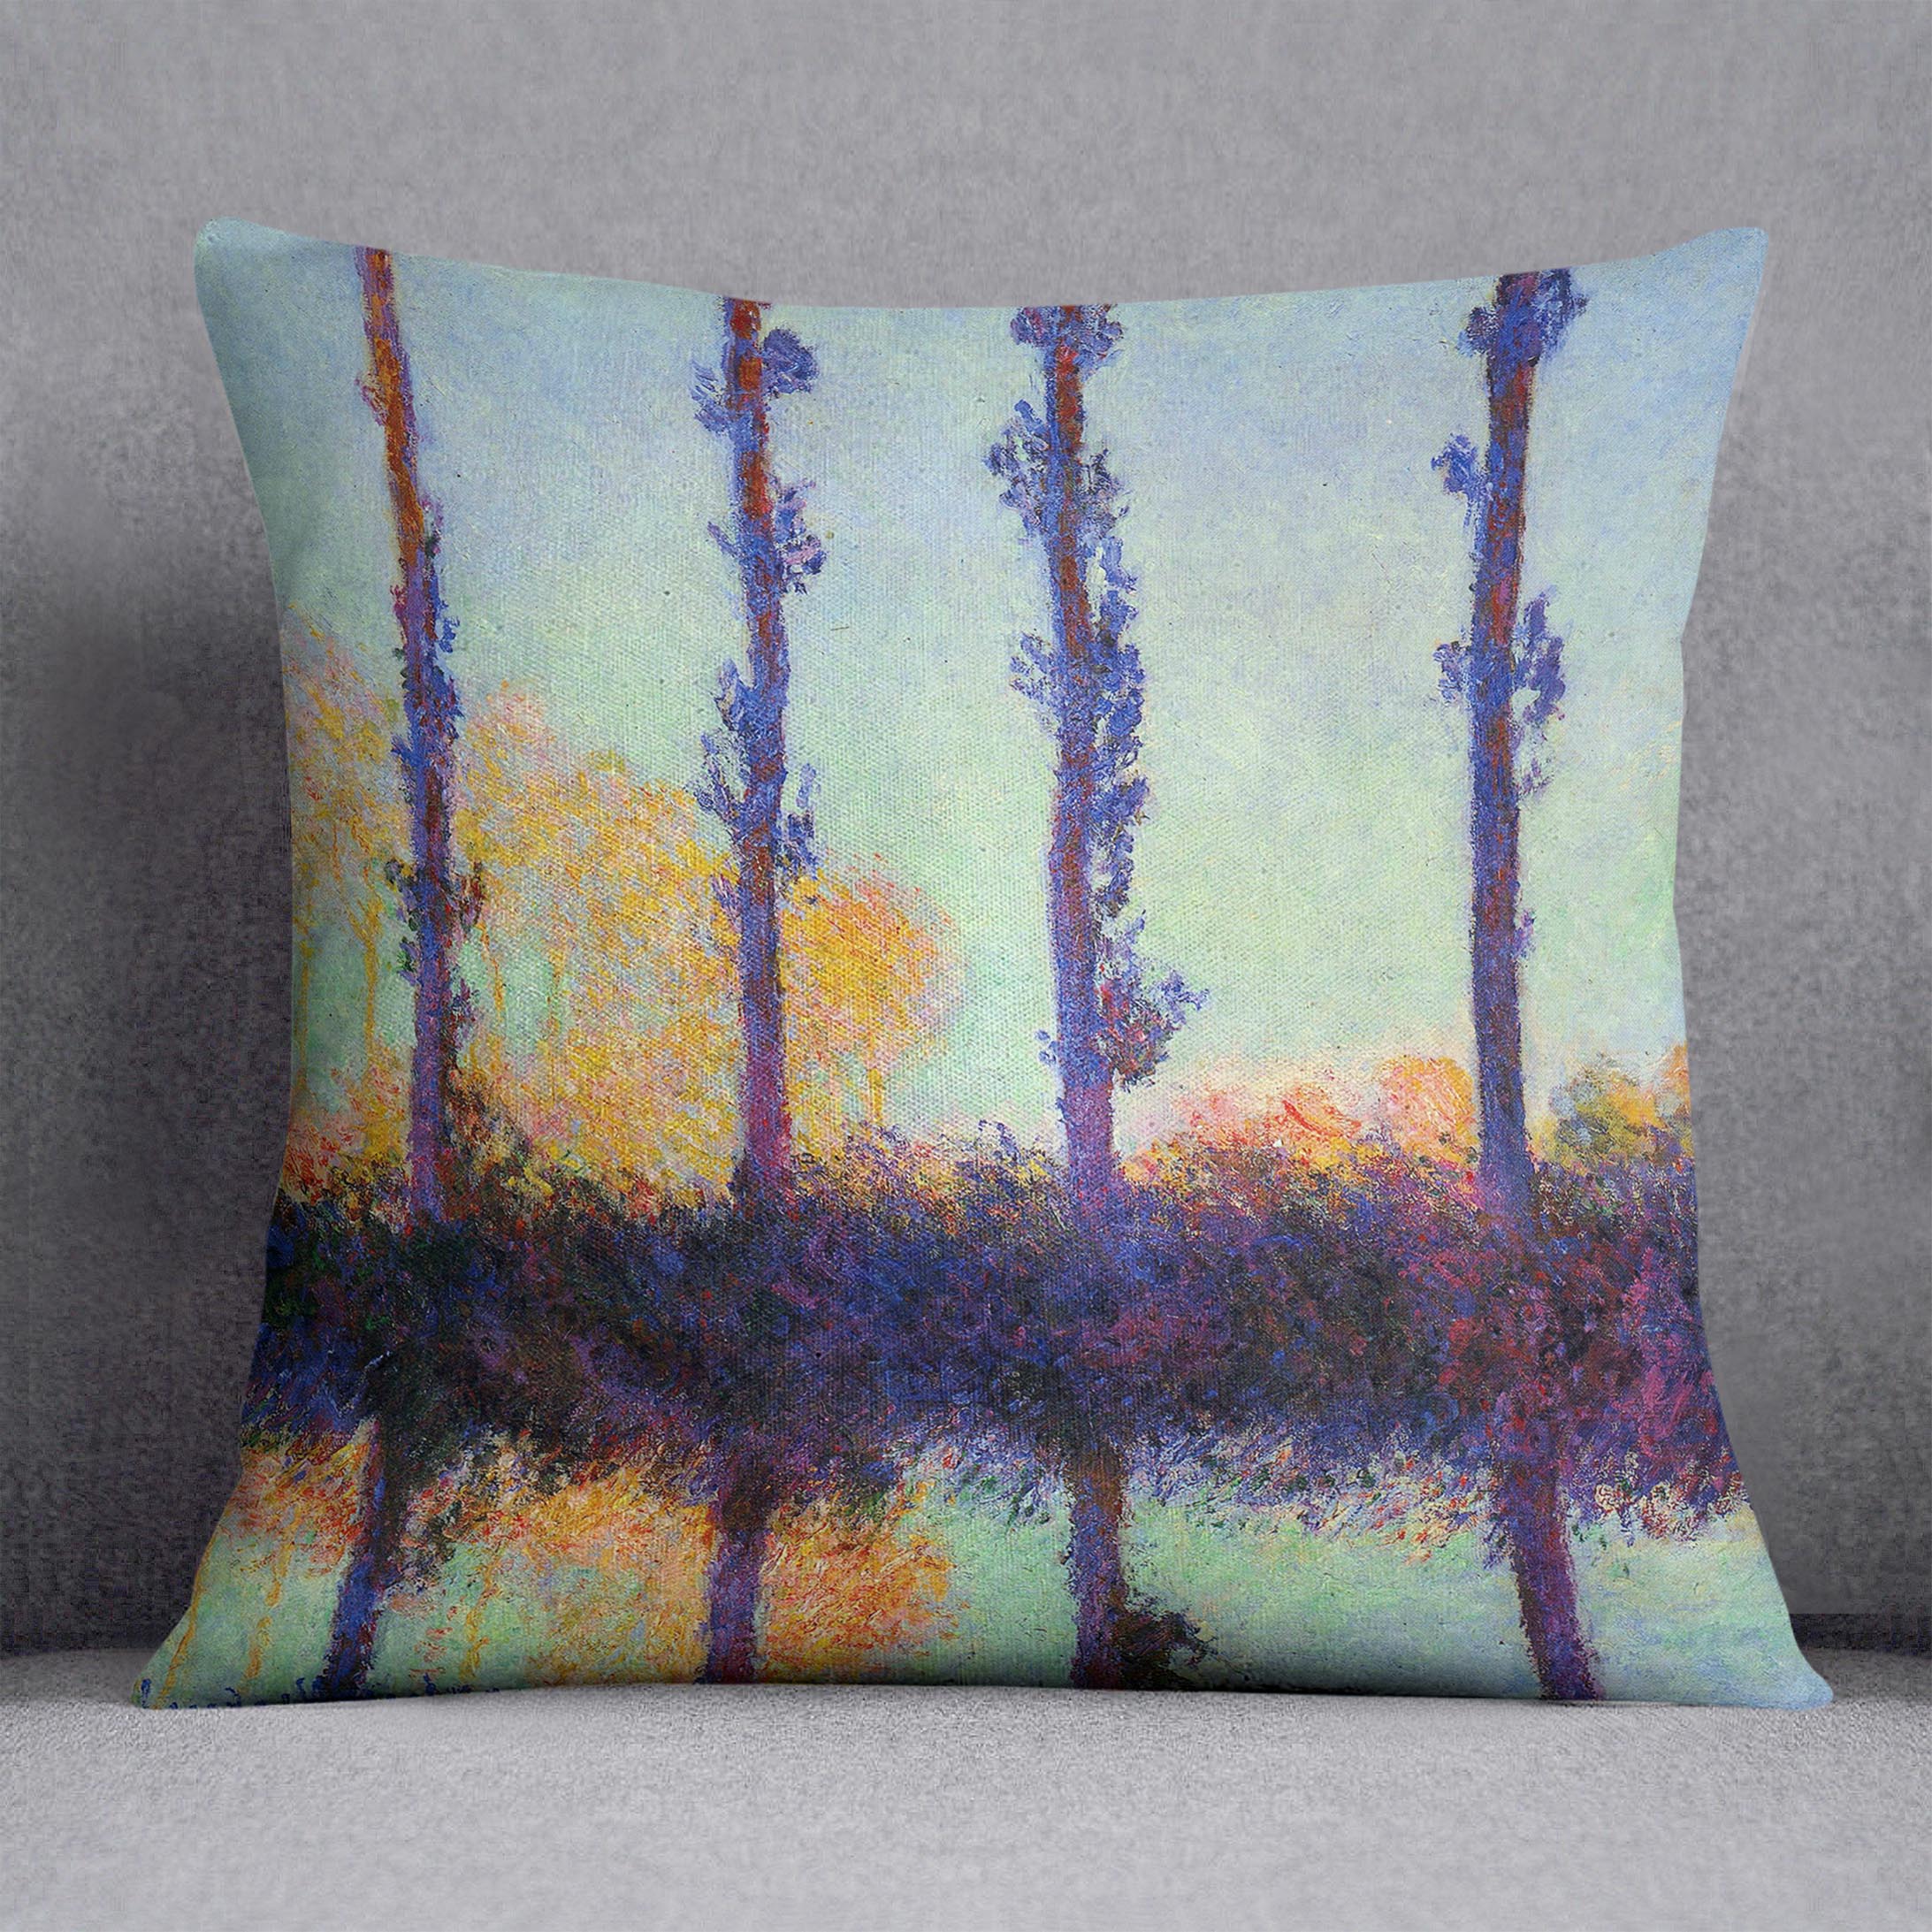 Four poplars by Monet Cushion